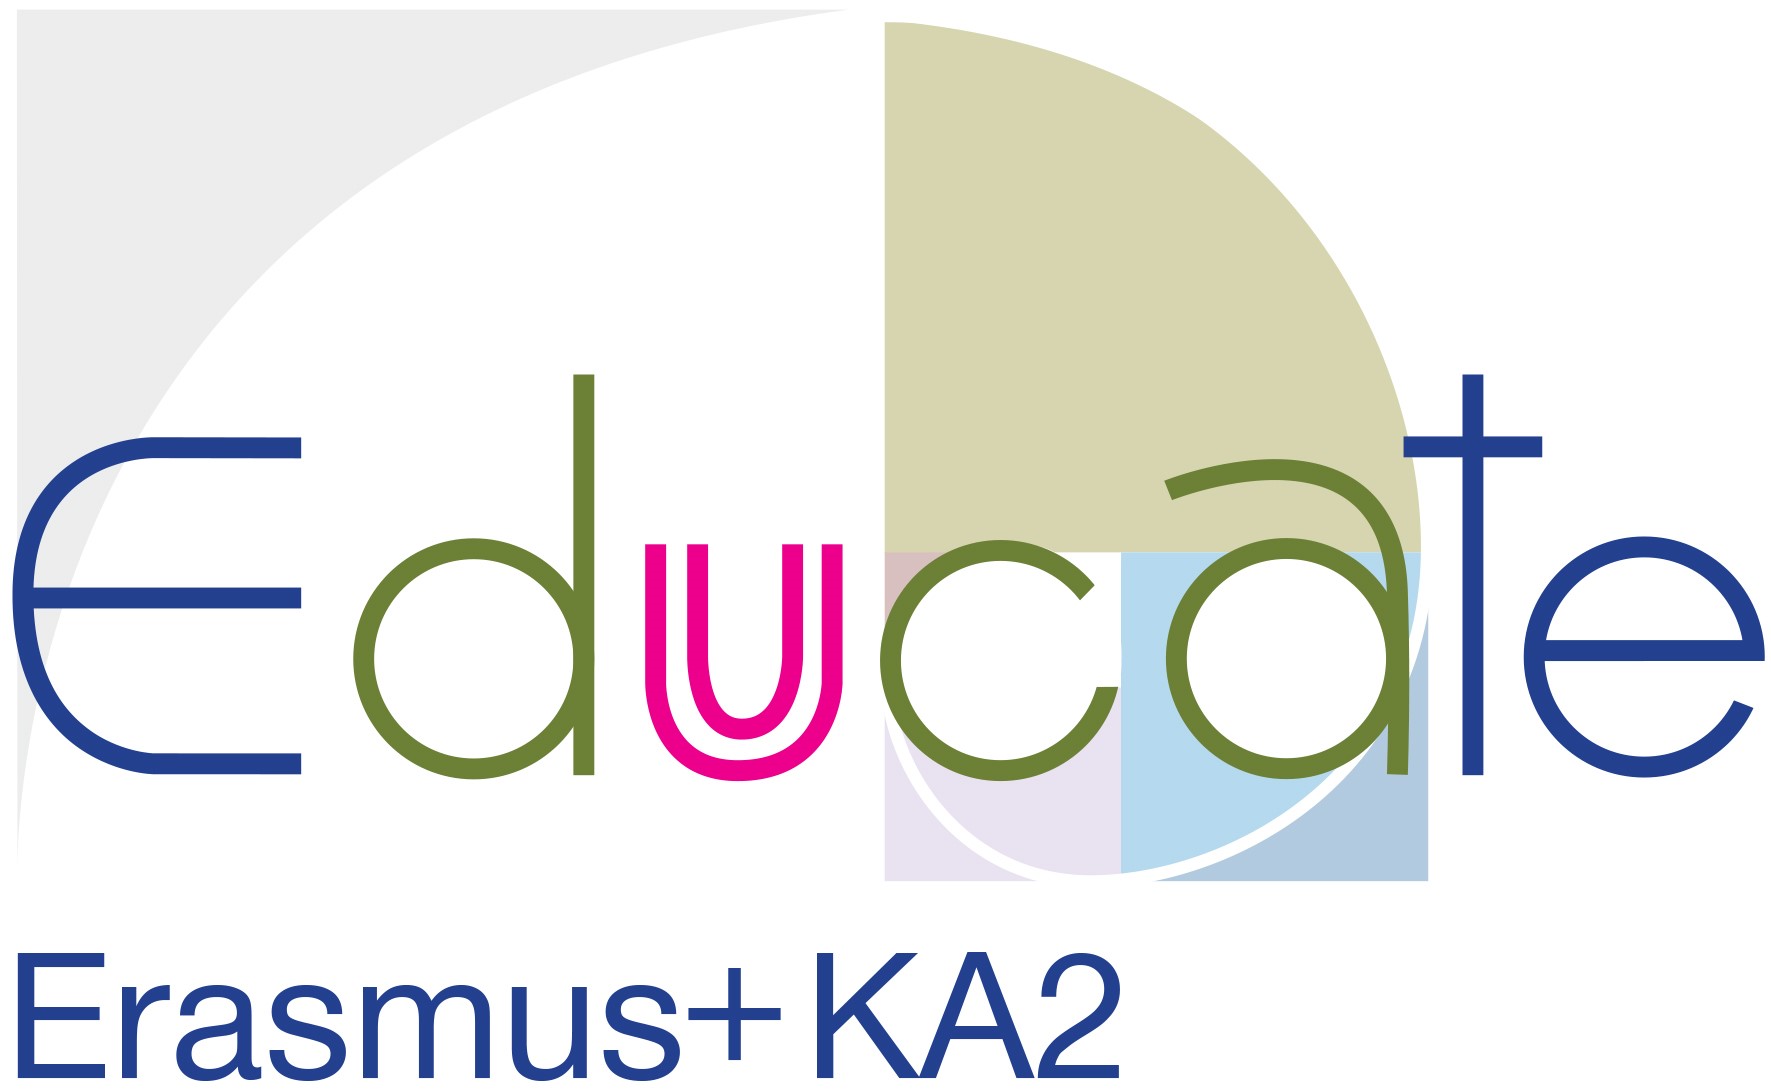 EUDCATE Logo